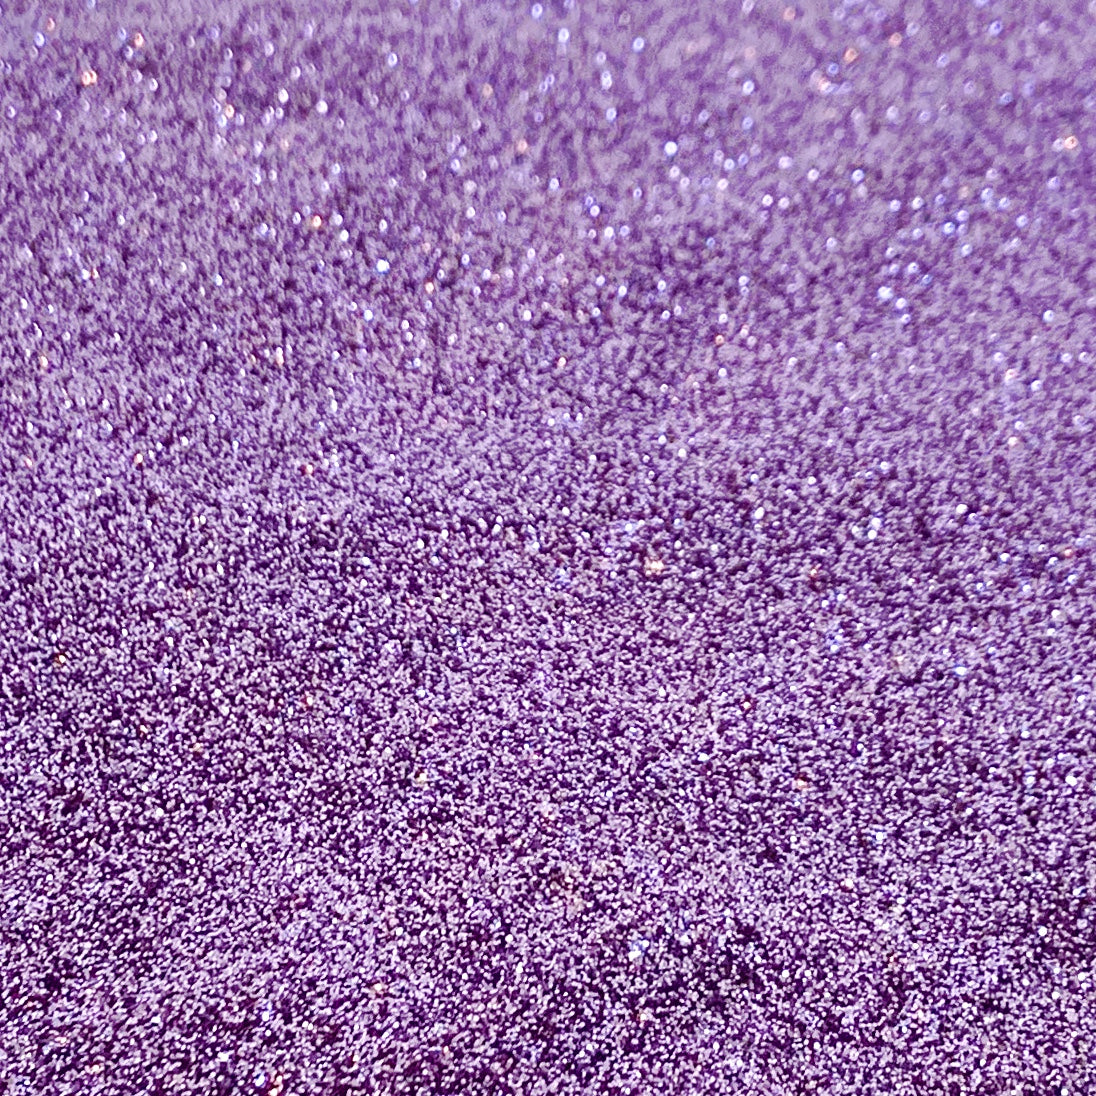 Violet Fine Biodegradable Glitter